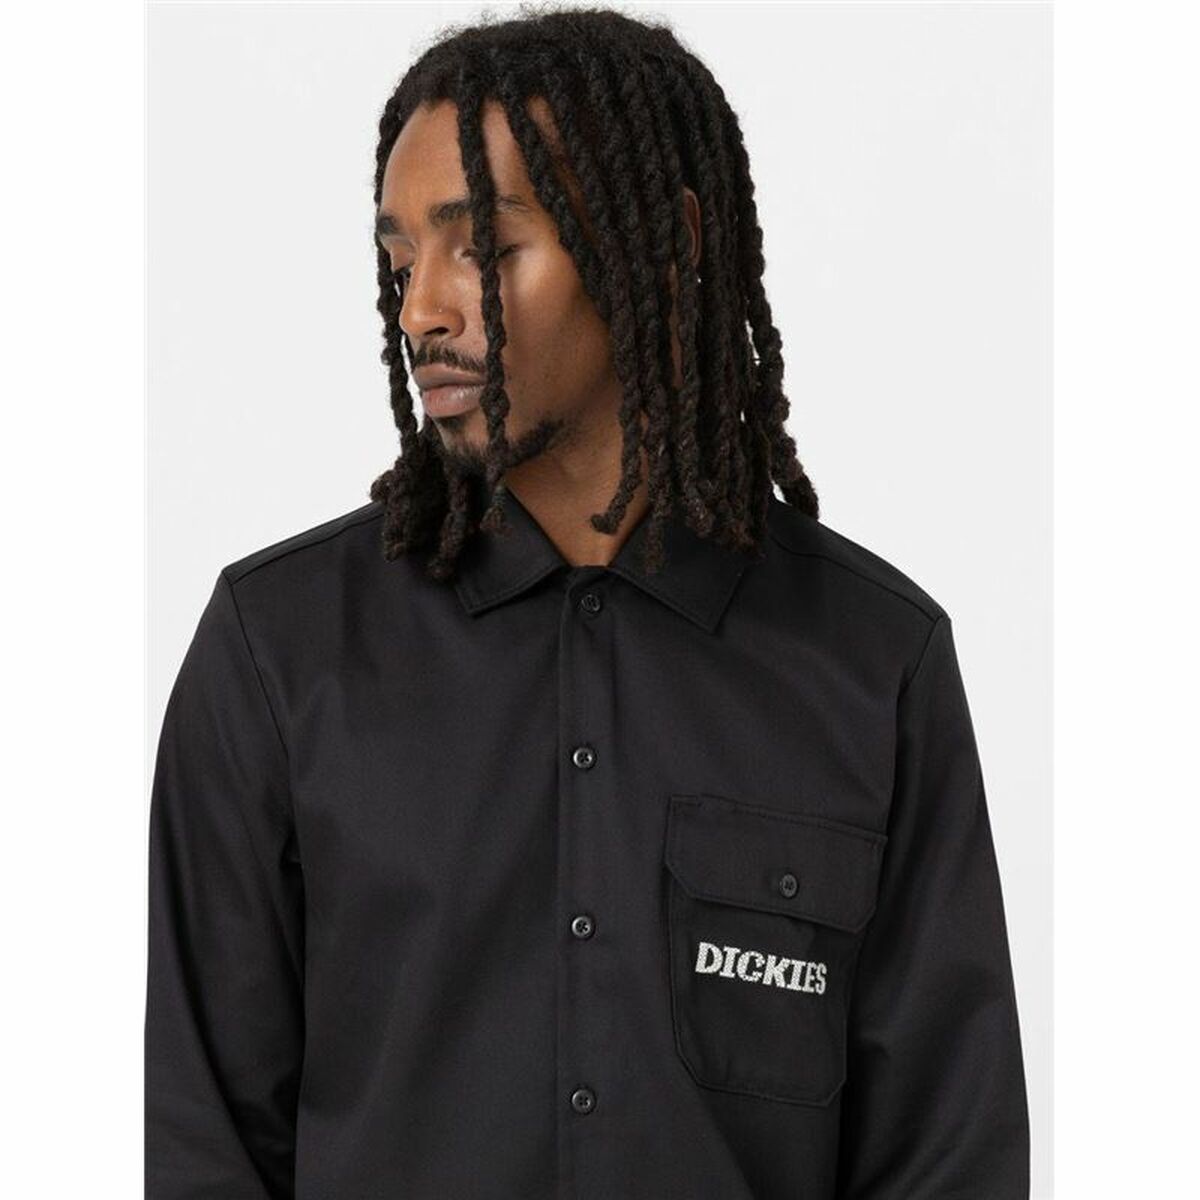 Men’s Long Sleeve Shirt Dickies Wichita Black